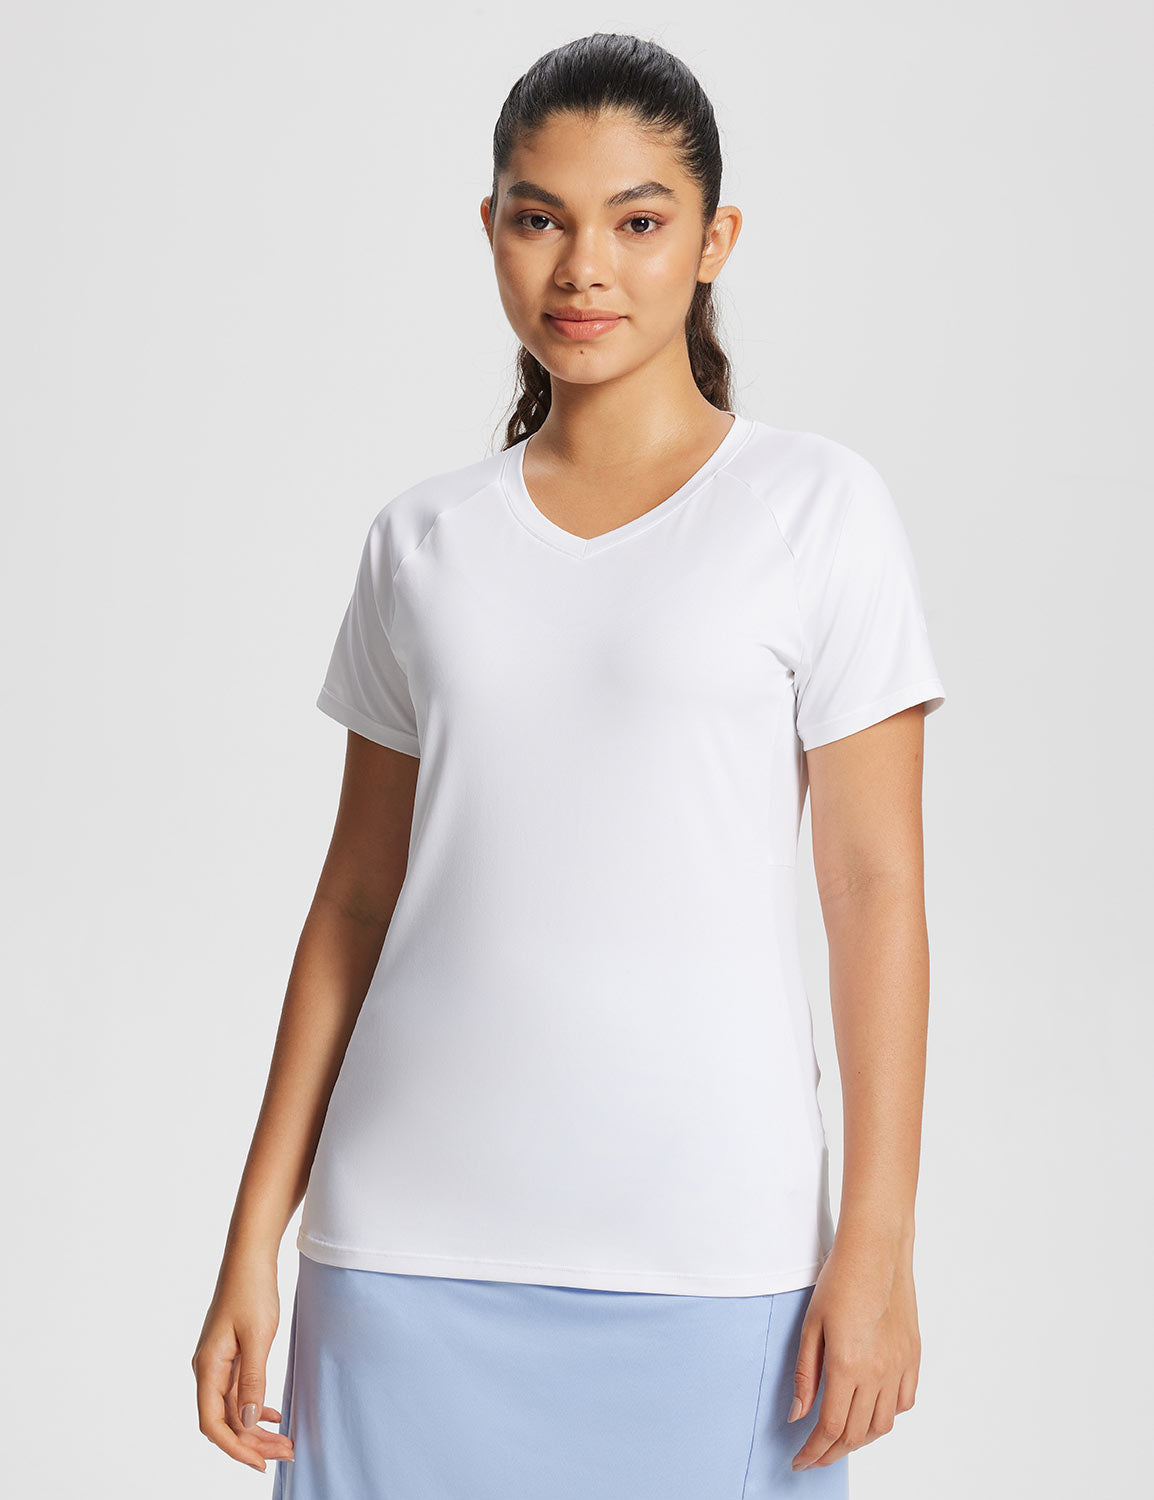 Baleaf Women's Summer Short Sleeve V Neck T-shirts Lucent White Main